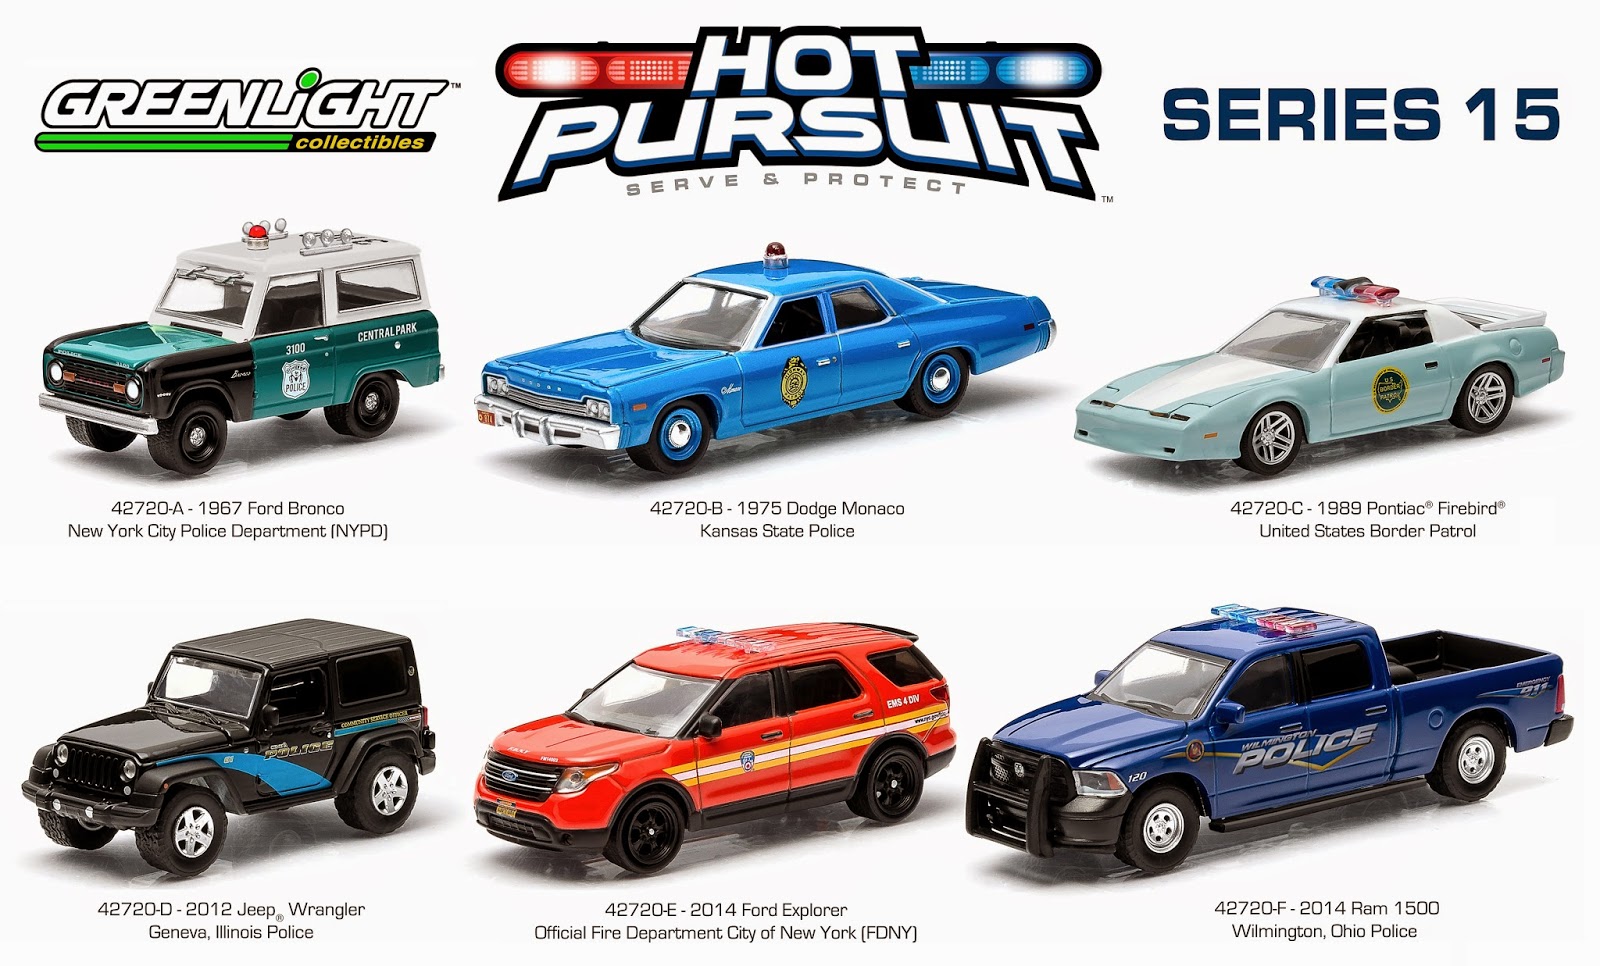 Greenlight Hot Pursuit Series 15.